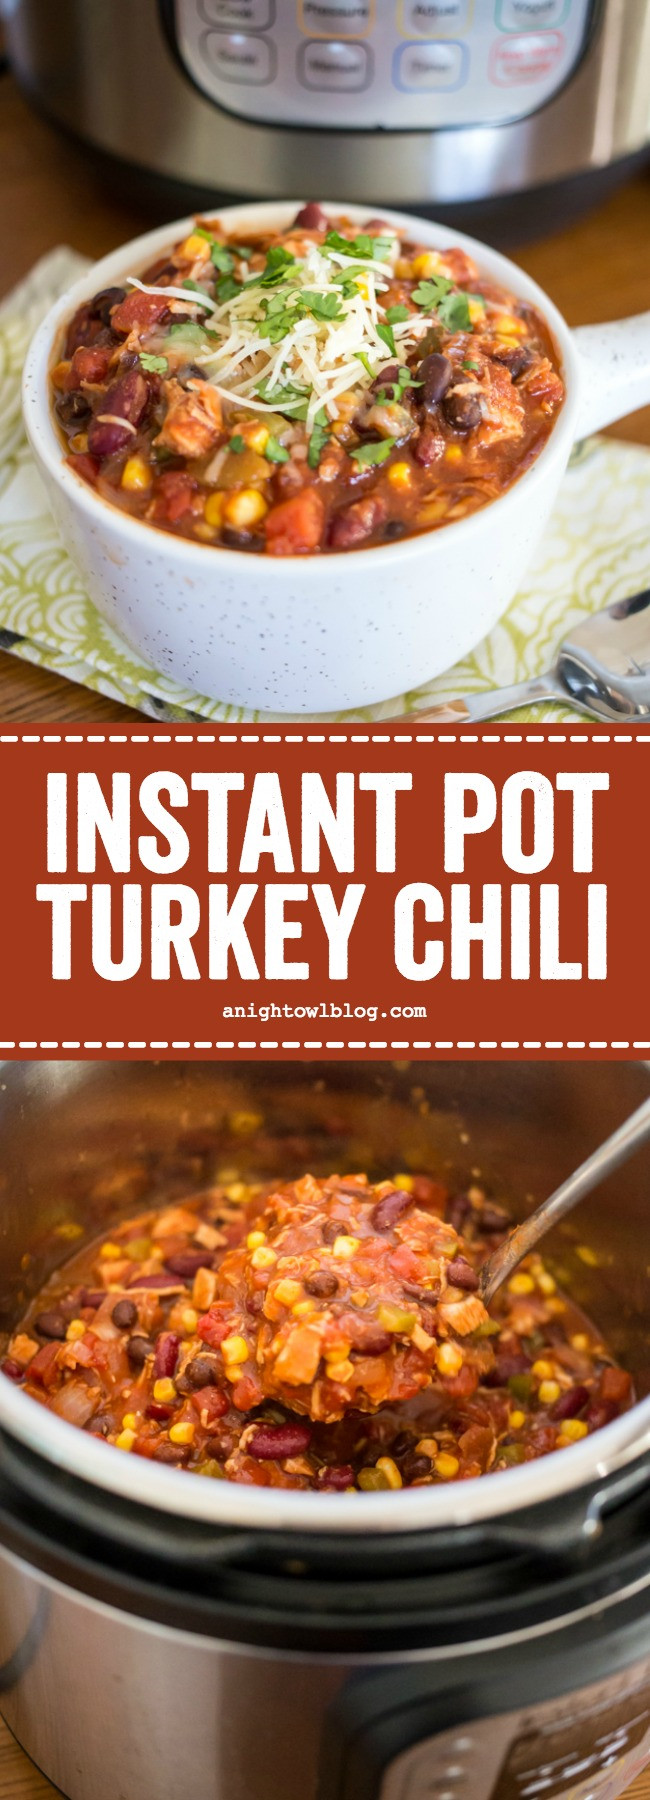 Instant Pot Ground Turkey
 Instant Pot Turkey Chili